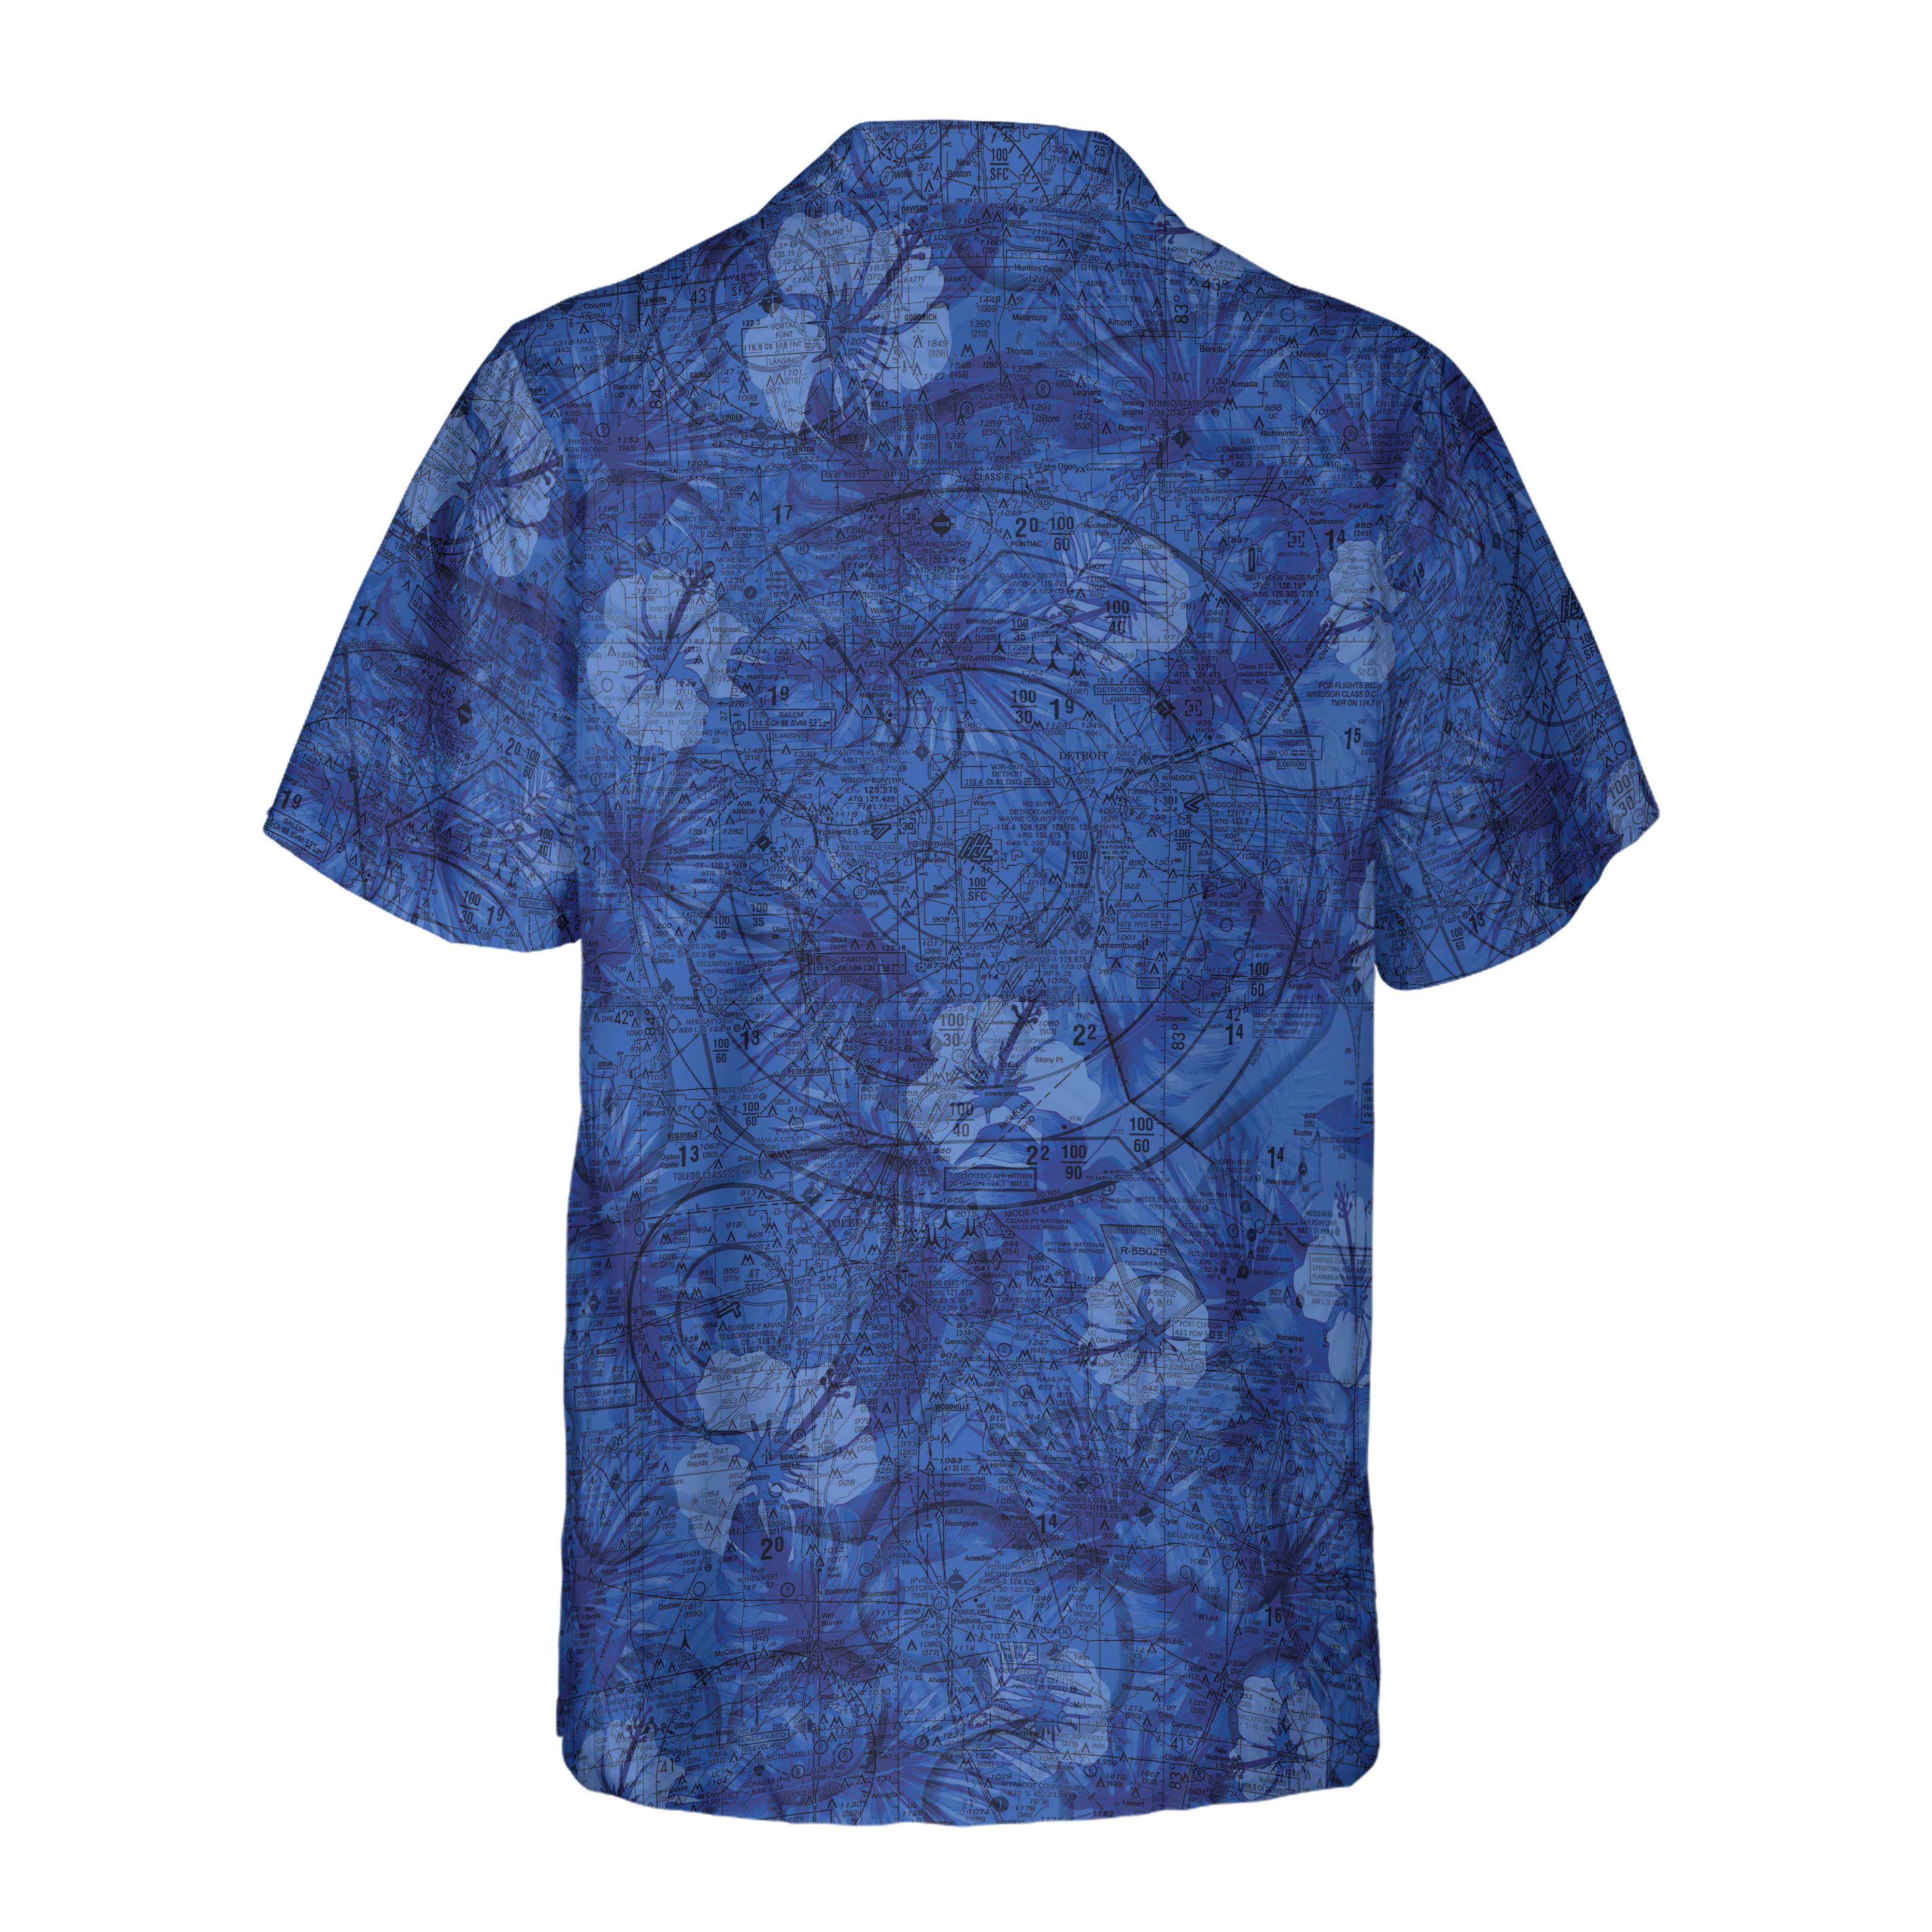 The Detroit Blue Summer Flowers Coconut Button Camp Shirt